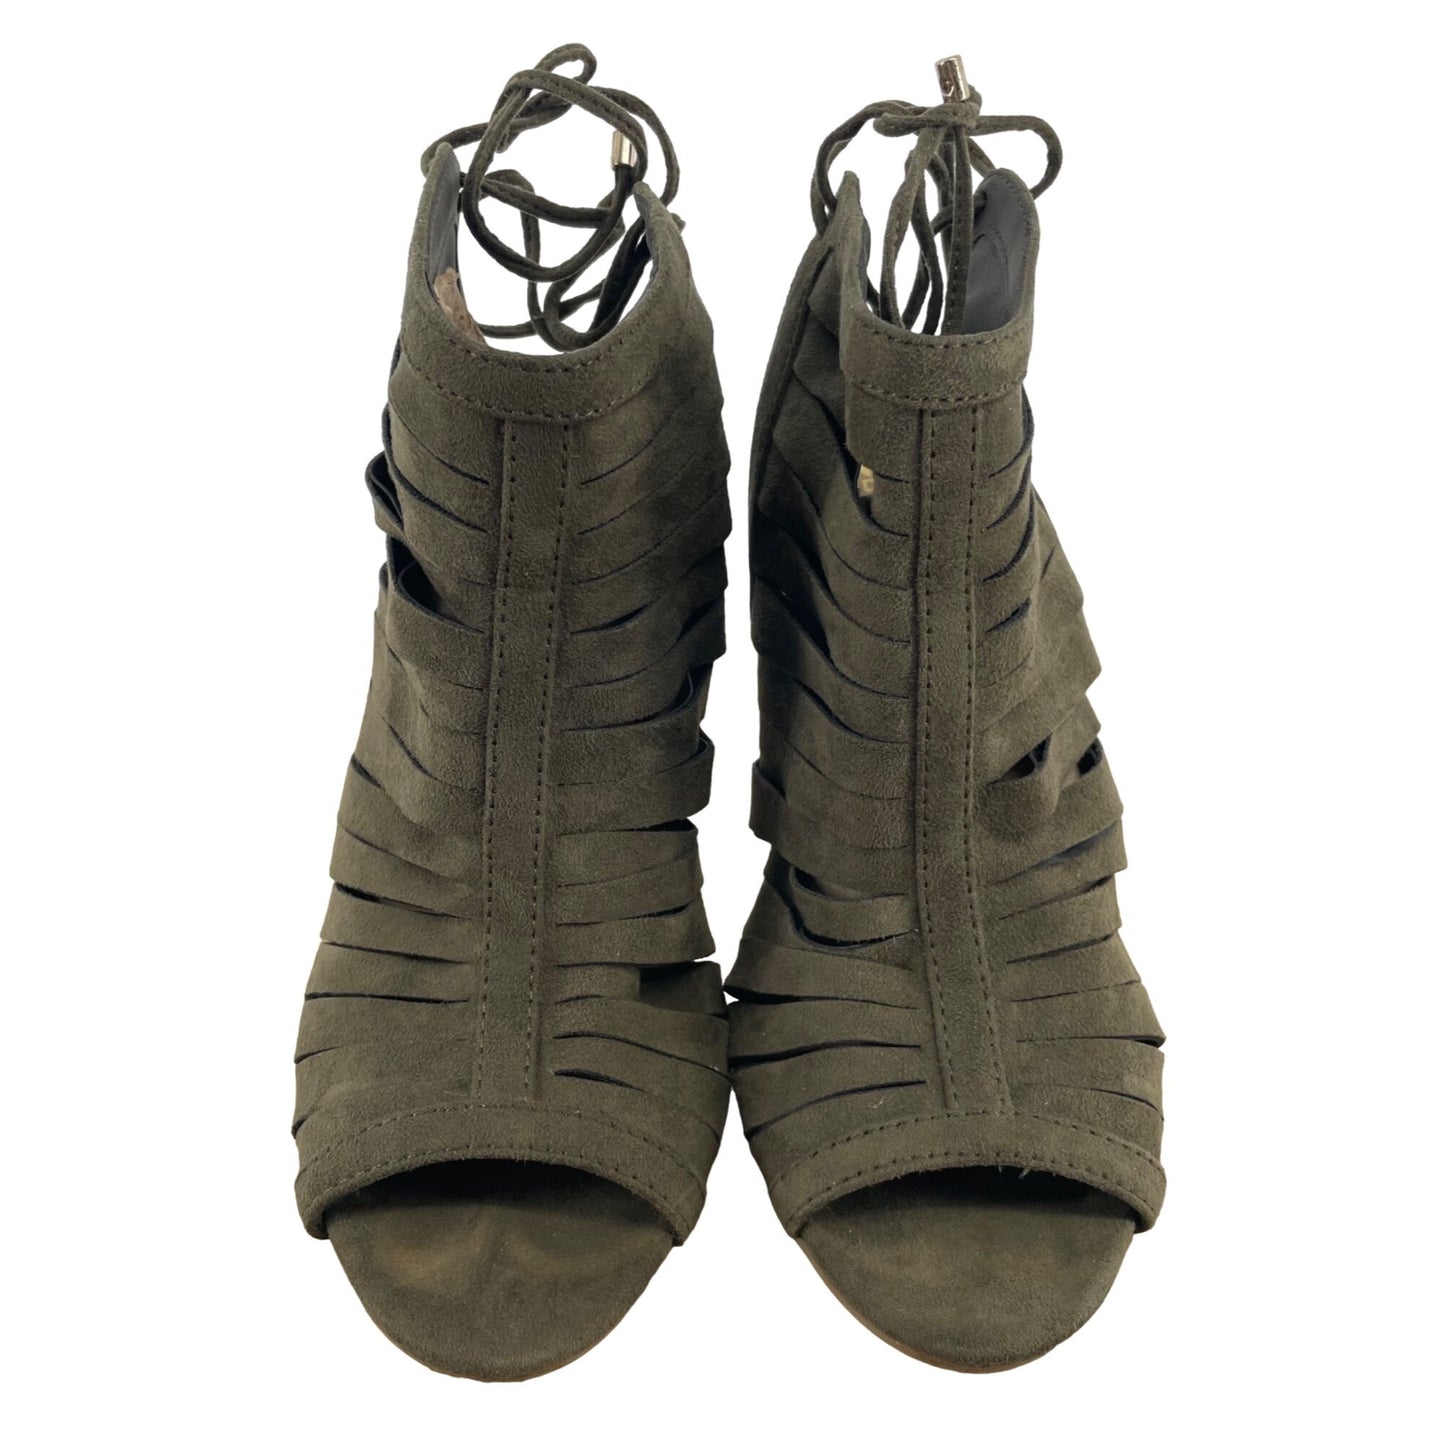 Trash Women's Size 8 Olive Green Suede Peep Toe 4" Heel Sandals W/ Ankle Tie